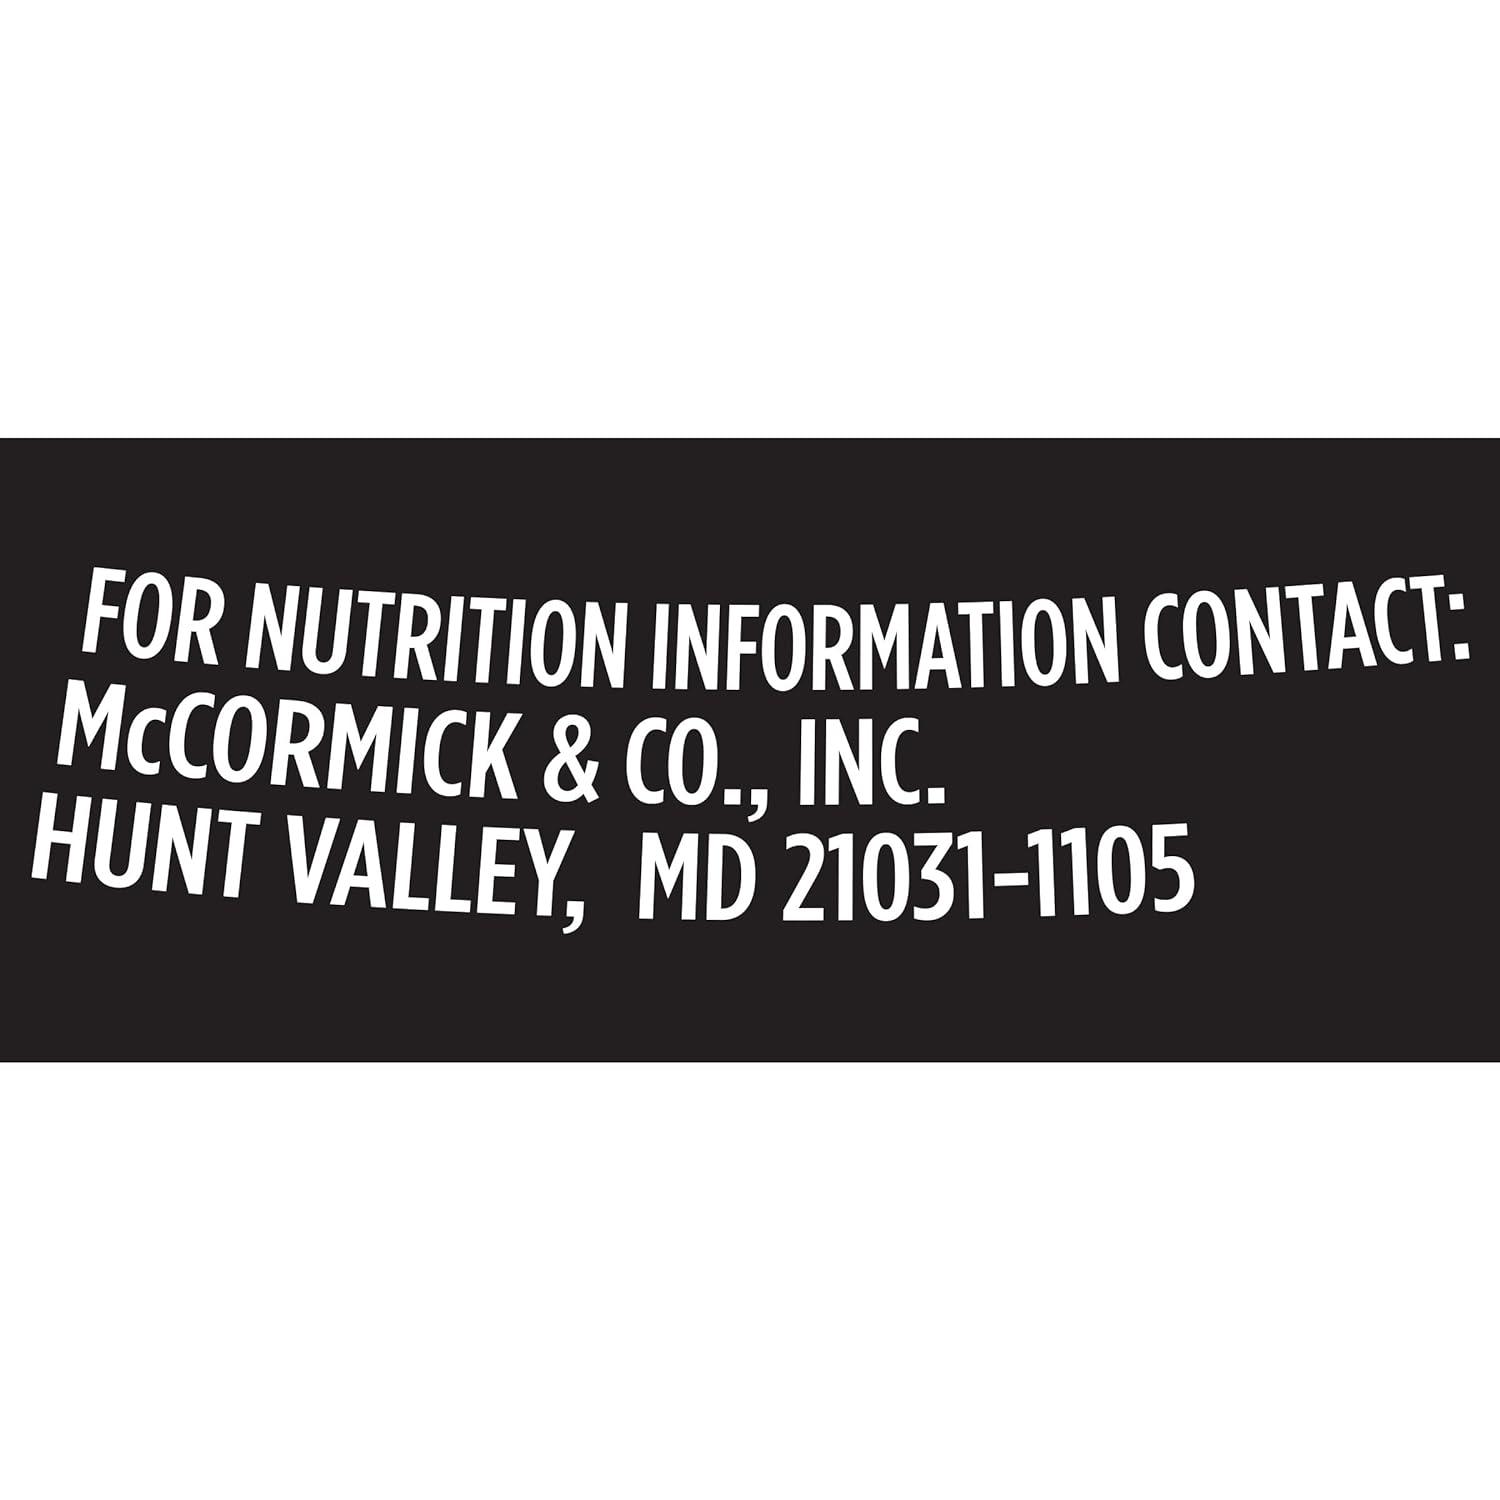  McCormick Premium Black & White Peppercorn Grinder